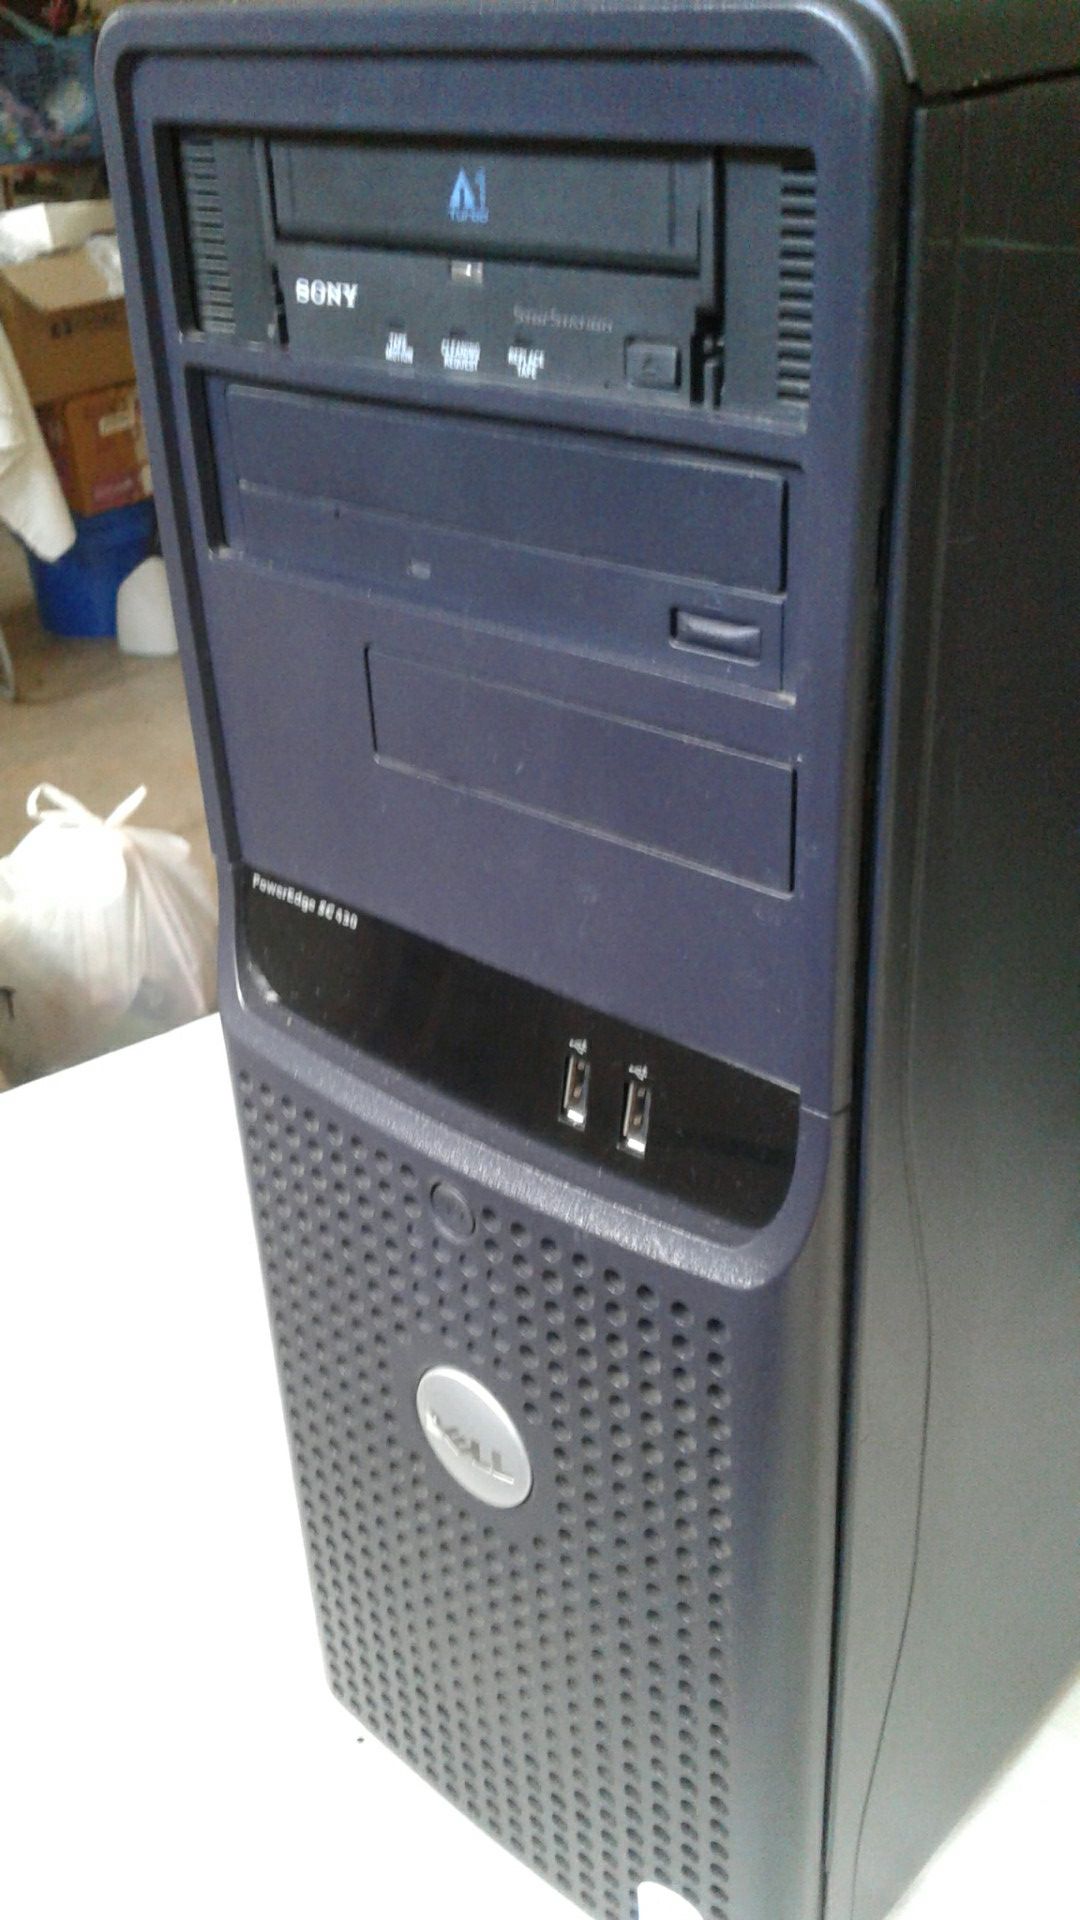 Pre-owned Dell desk top computer